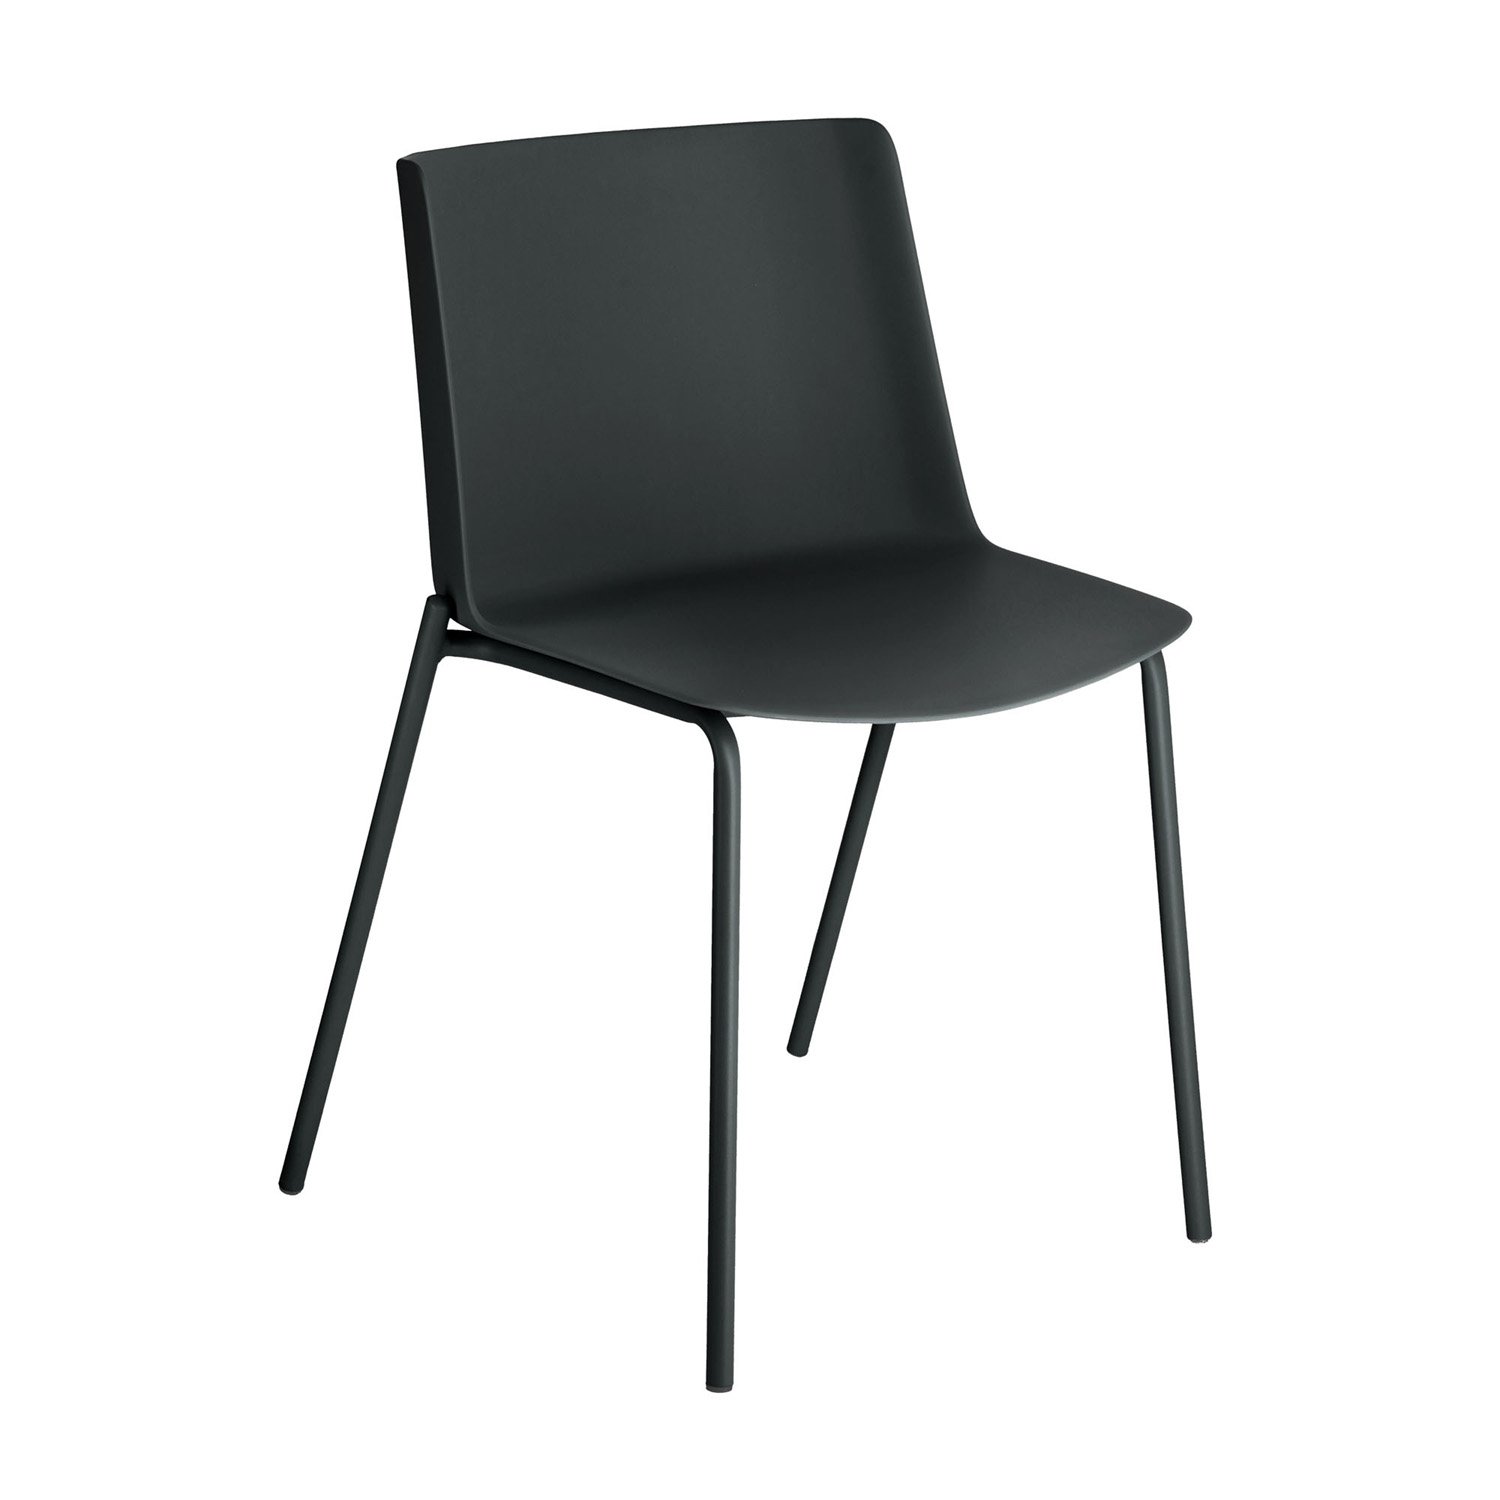 LAFORMA Hannia - spisebordsstol, u. armlæn - sort plast og stål